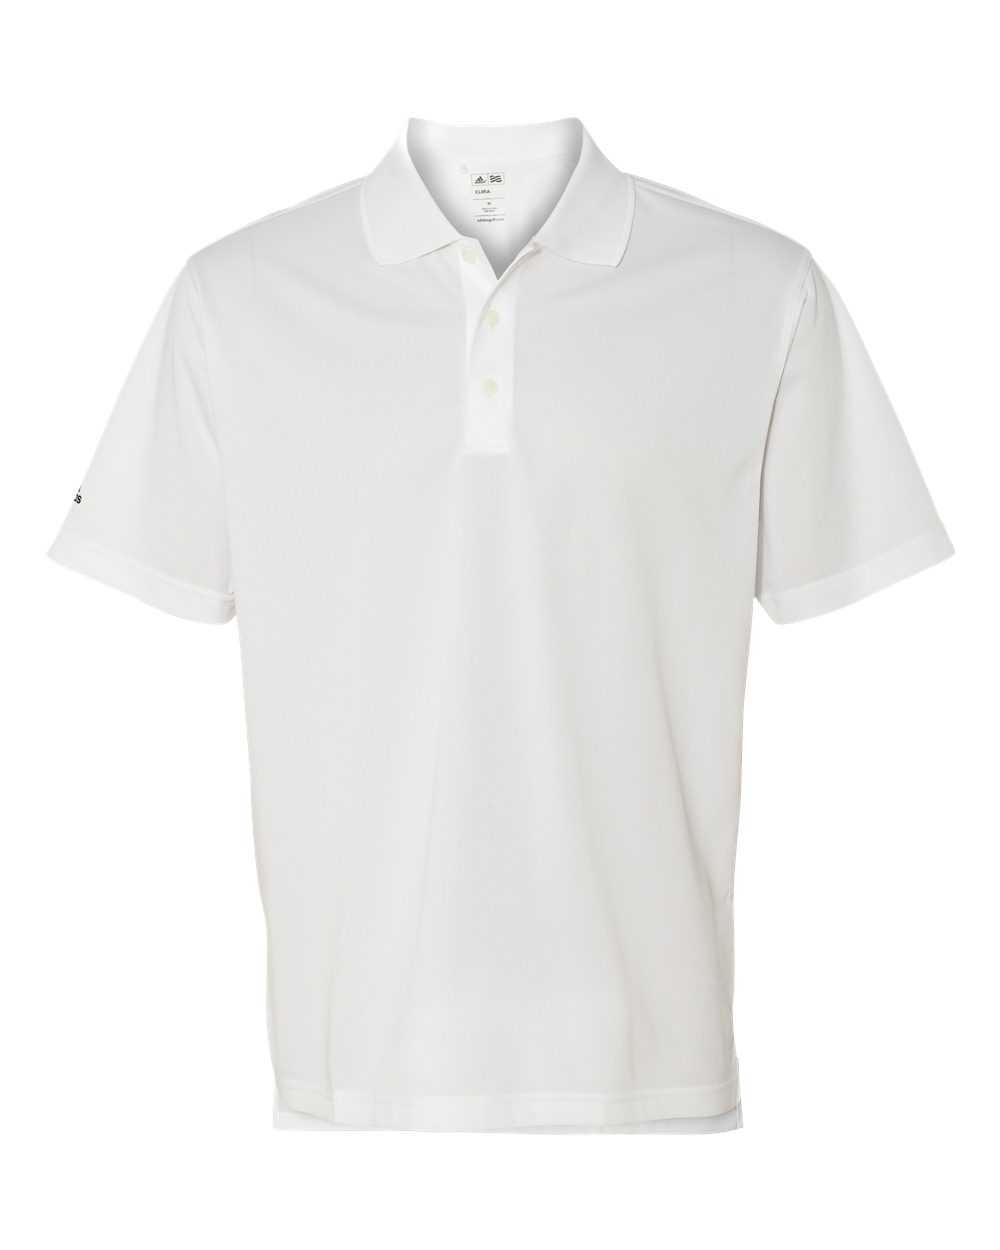 Adidas A130 Basic Sport Shirt - White Black - HIT a Double